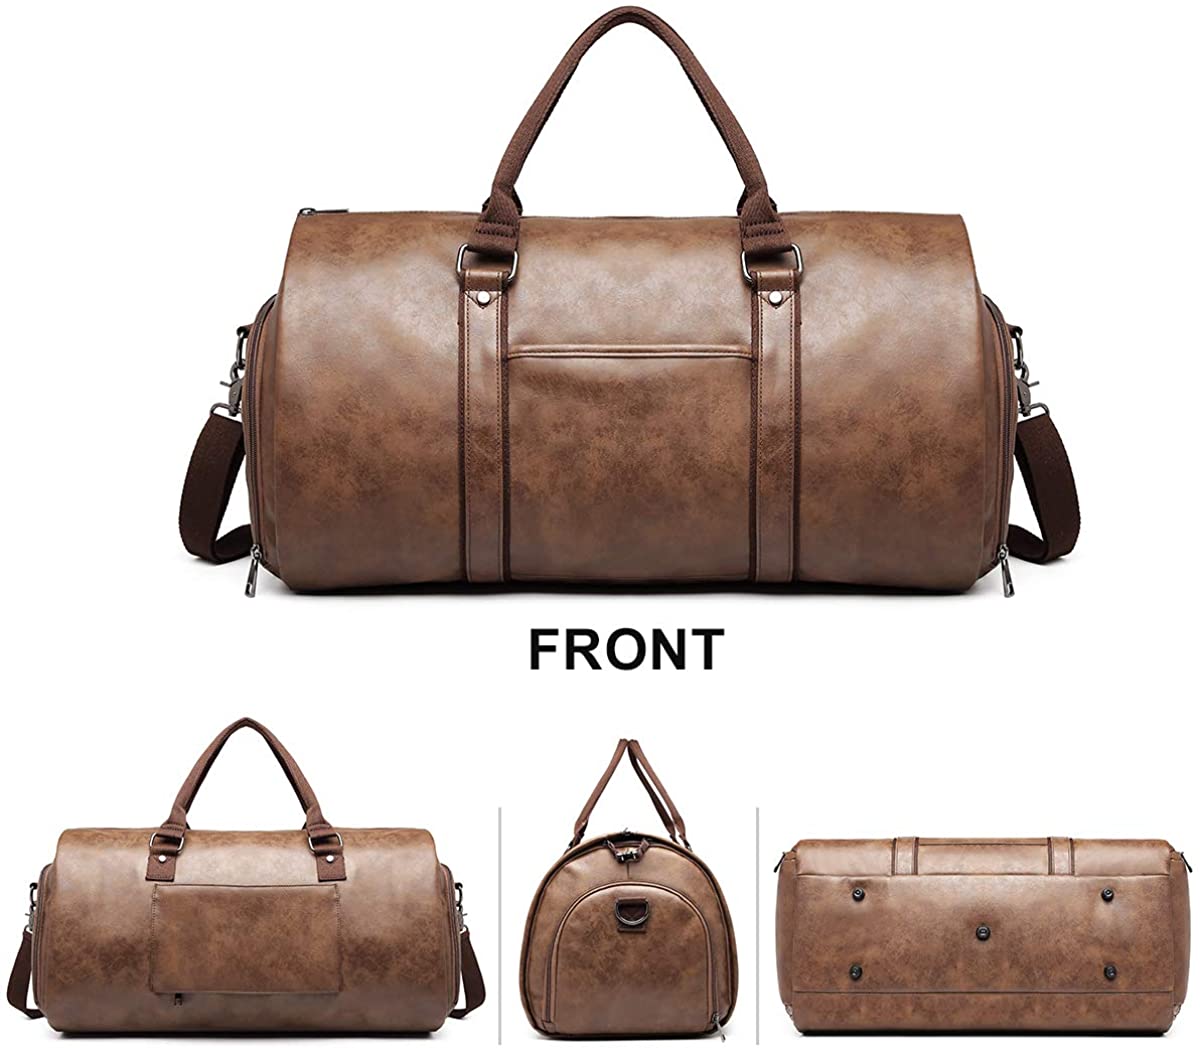 Premium Canvas Garment Duffel Bag Holdall Business Travel Hanging Suitcase  Convertible Travel Garment Bags